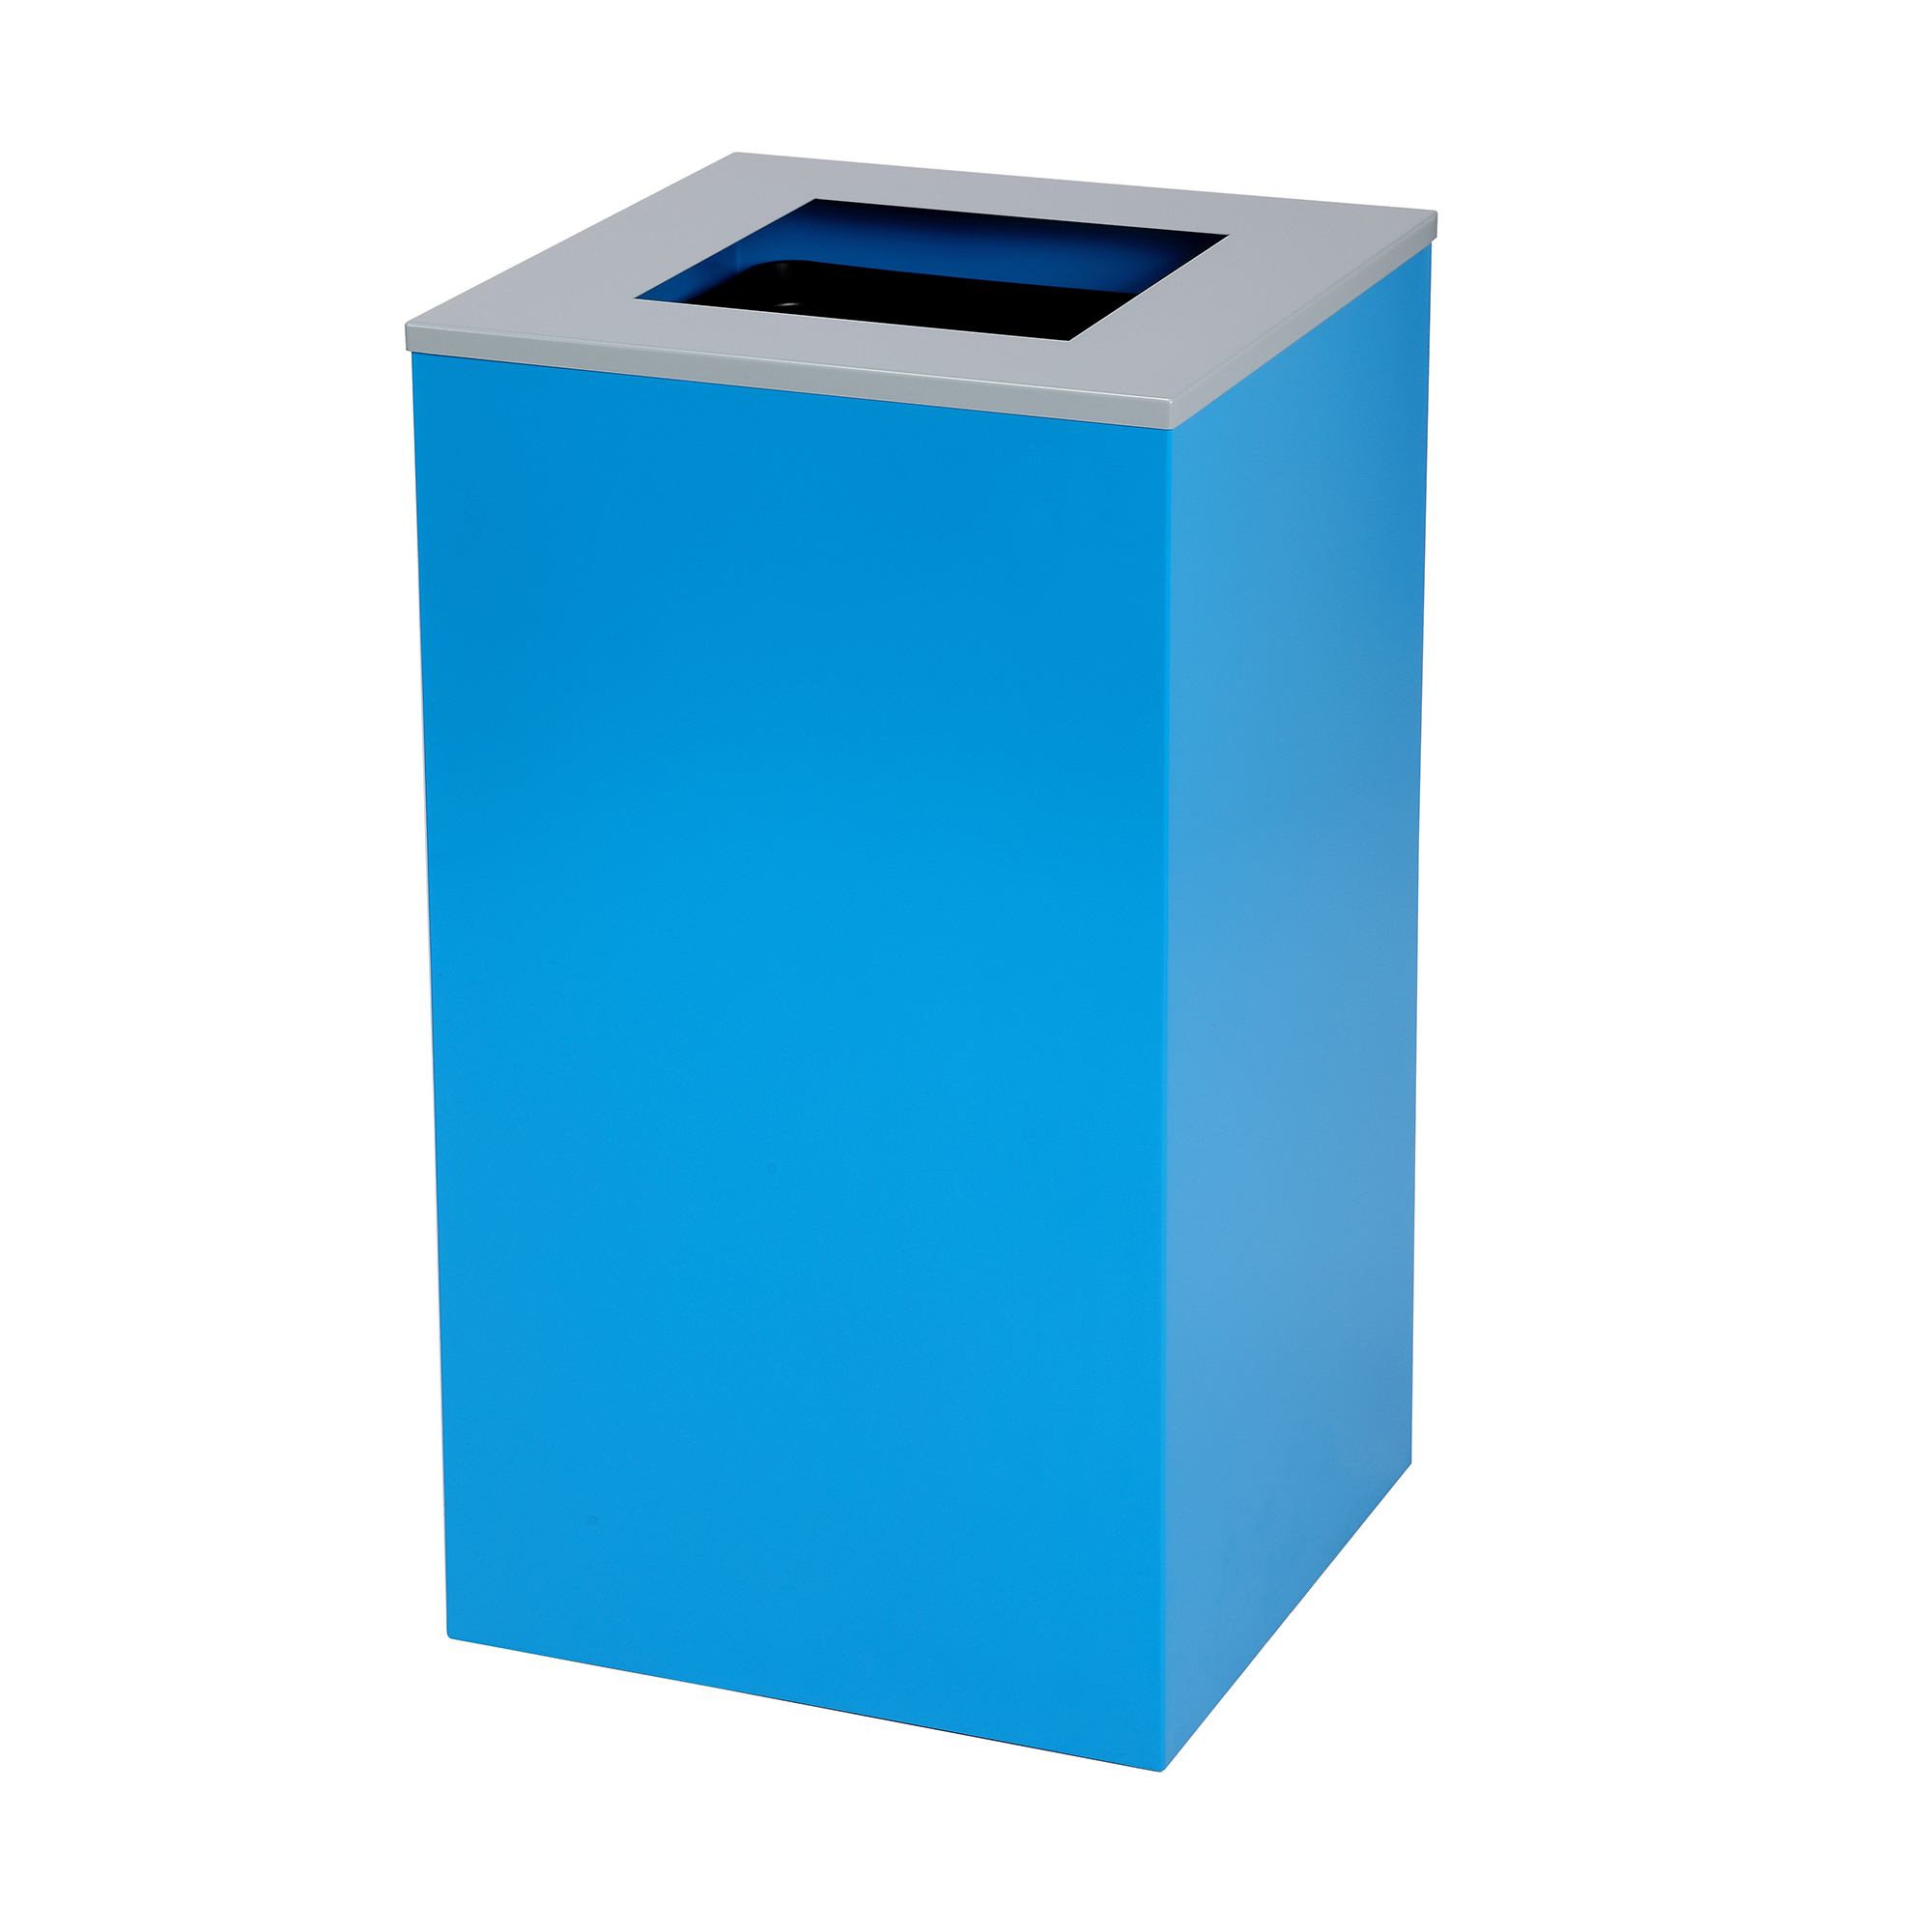 Alpine, 29-Gallon Square Metal Trash Can, Blue Bin, Capacity 29 Gal, Model ALP4450-KIT-BLU-S